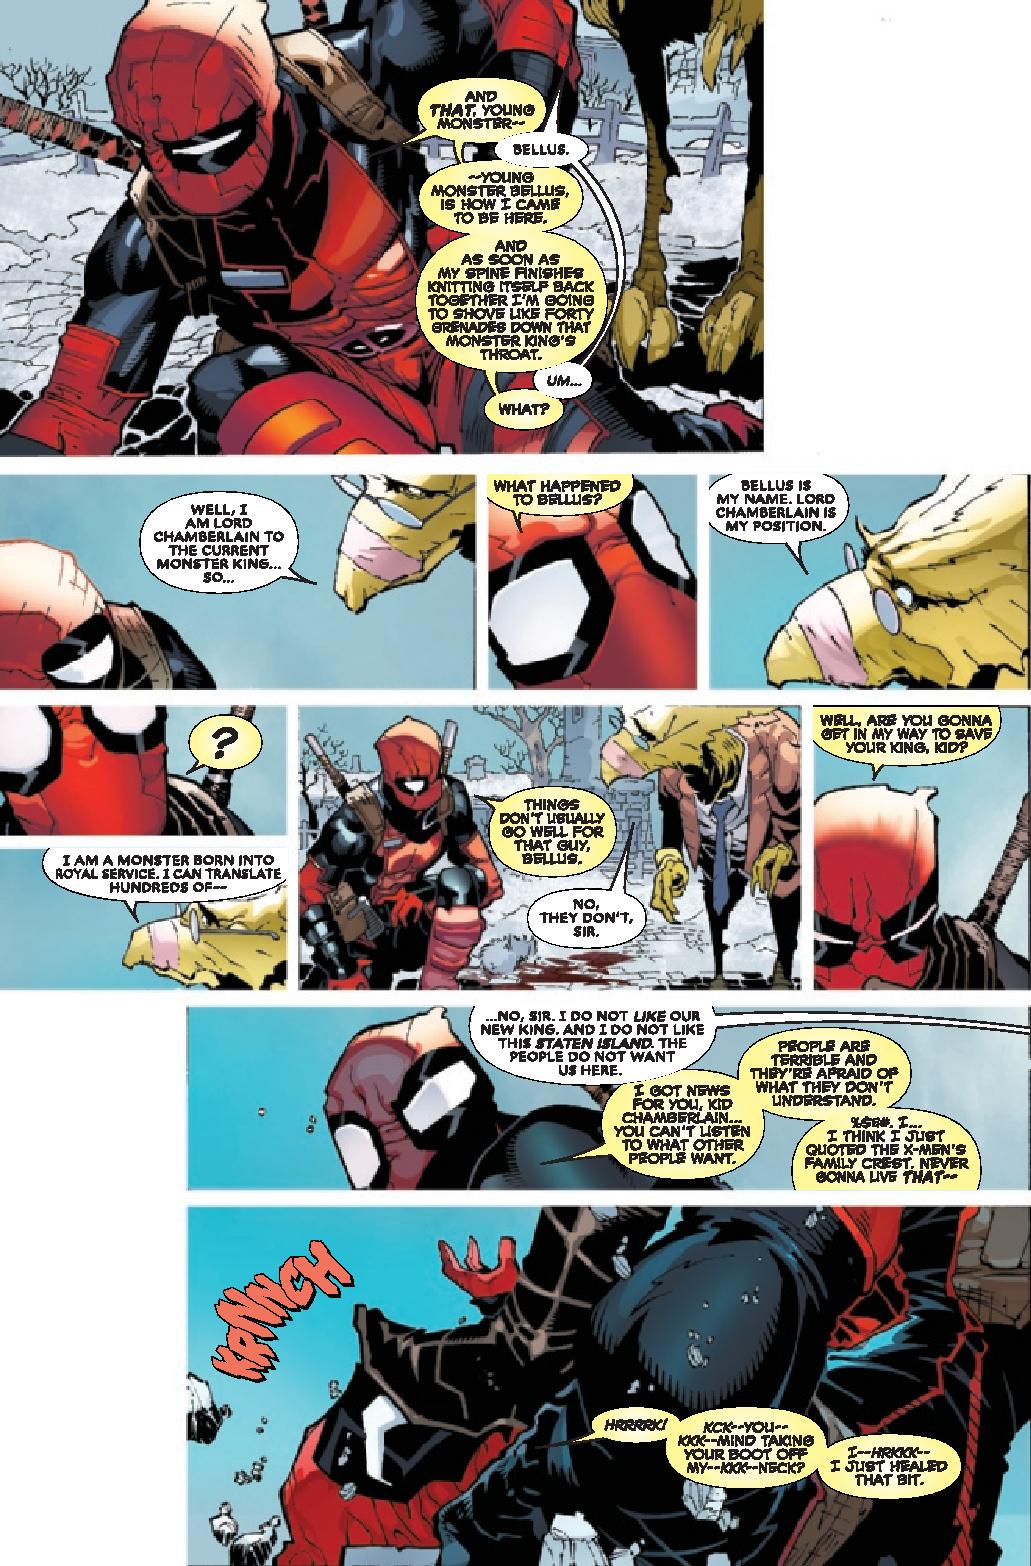 Deadpool #1 Finch Variant